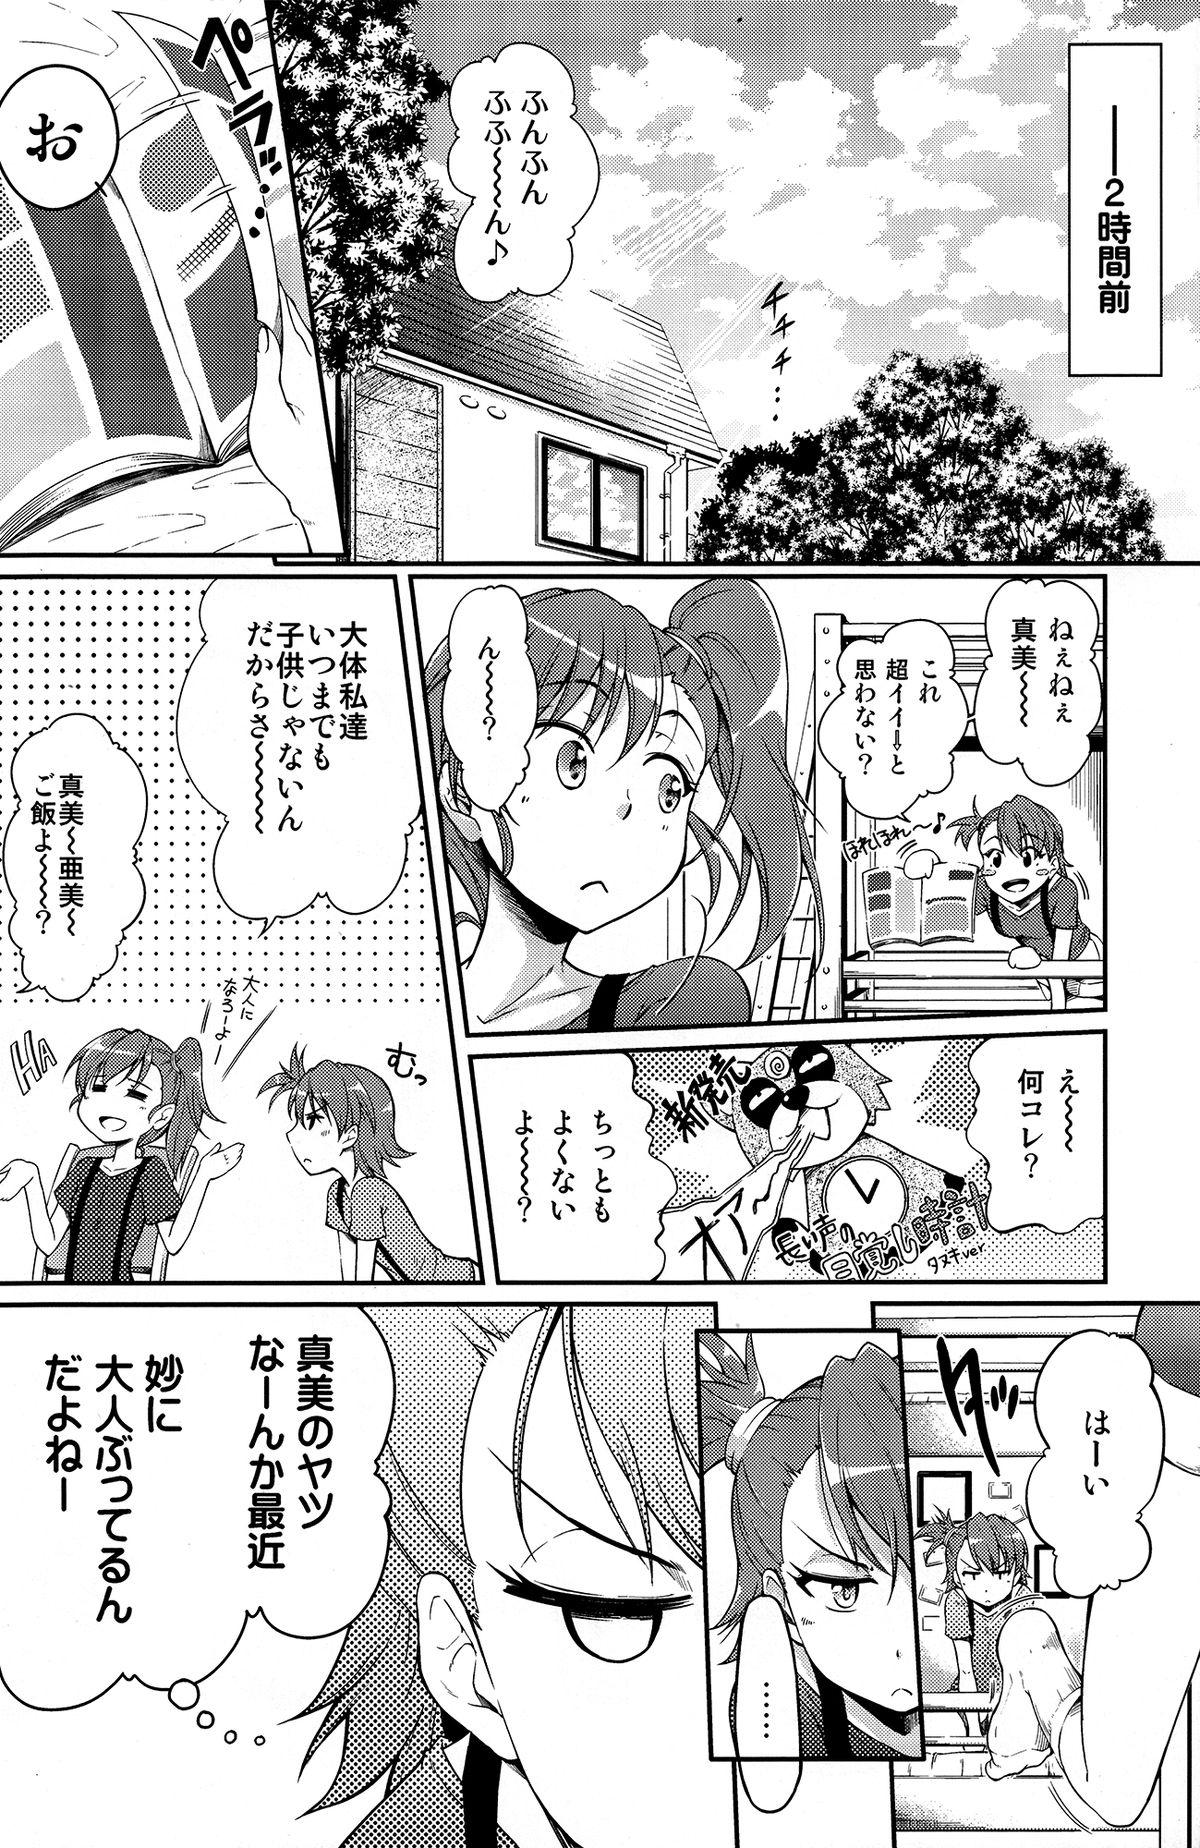 Ami→Mami Sneaking Daisakusen 4